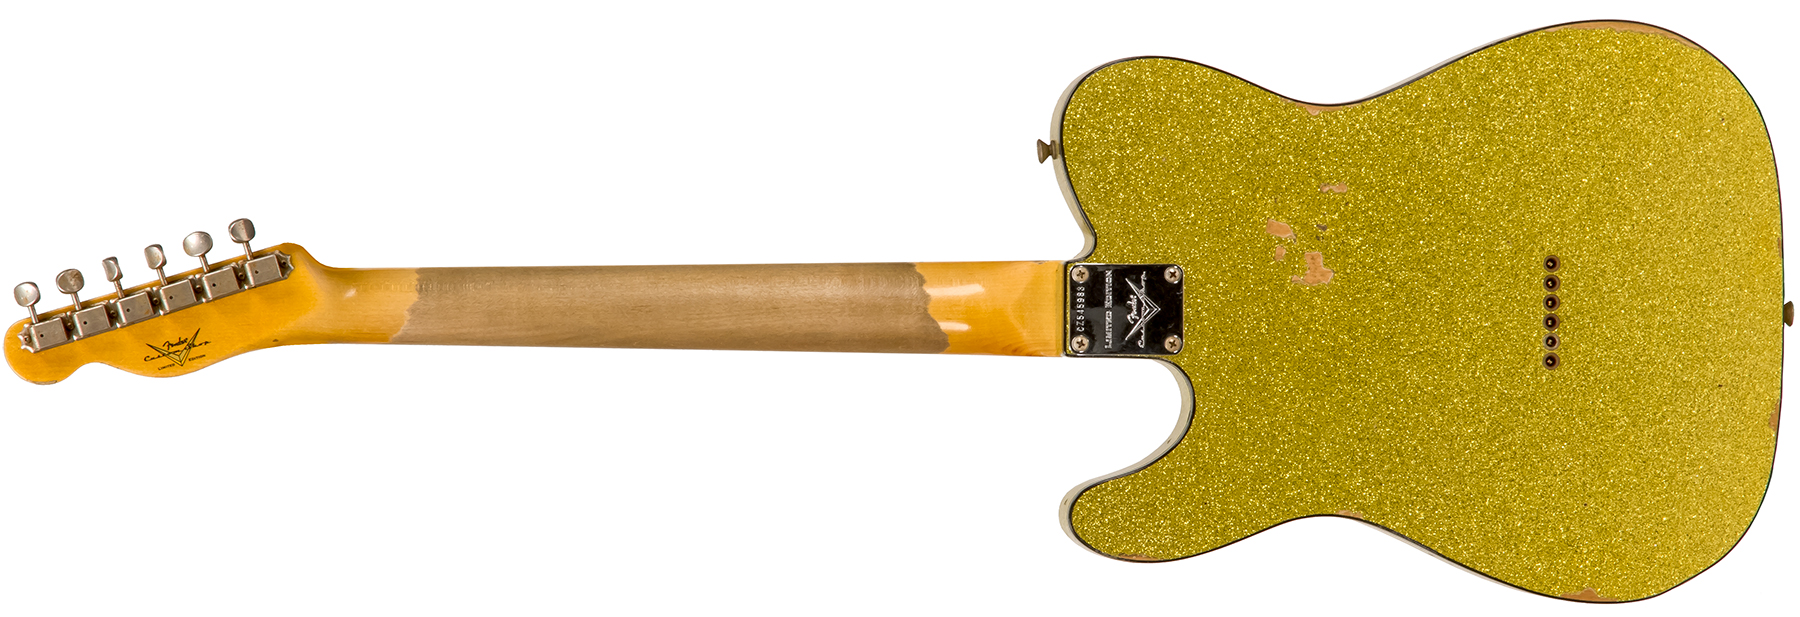 Fender Custom Shop Tele Custom 1963 2020 Ltd Rw #cz545983 - Relic Chartreuse Sparkle - E-Gitarre in Teleform - Variation 1